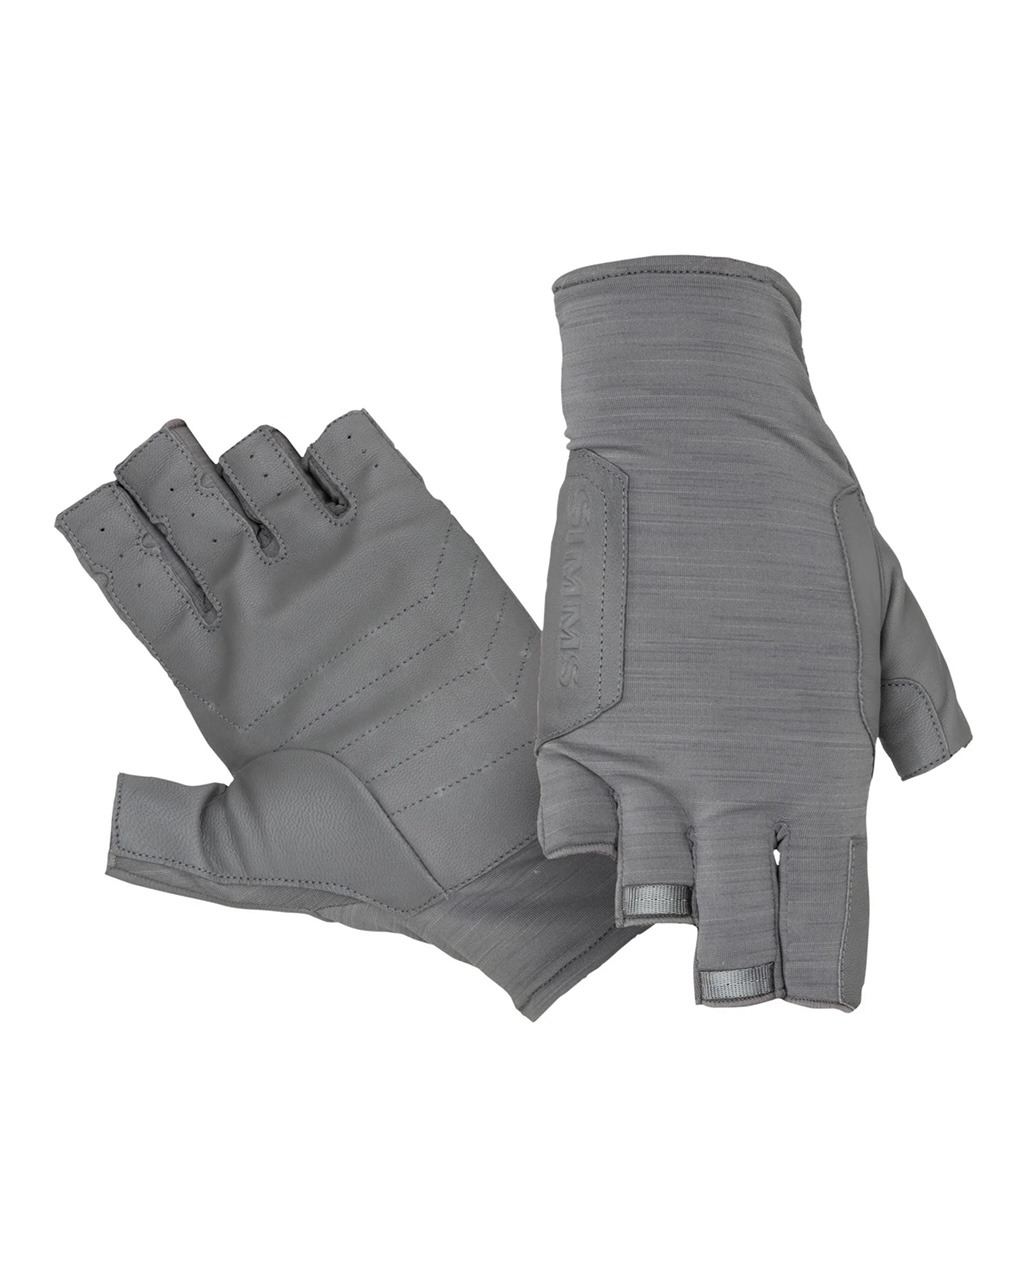 Simms Solarflex Guide Glove - Sterling - Small